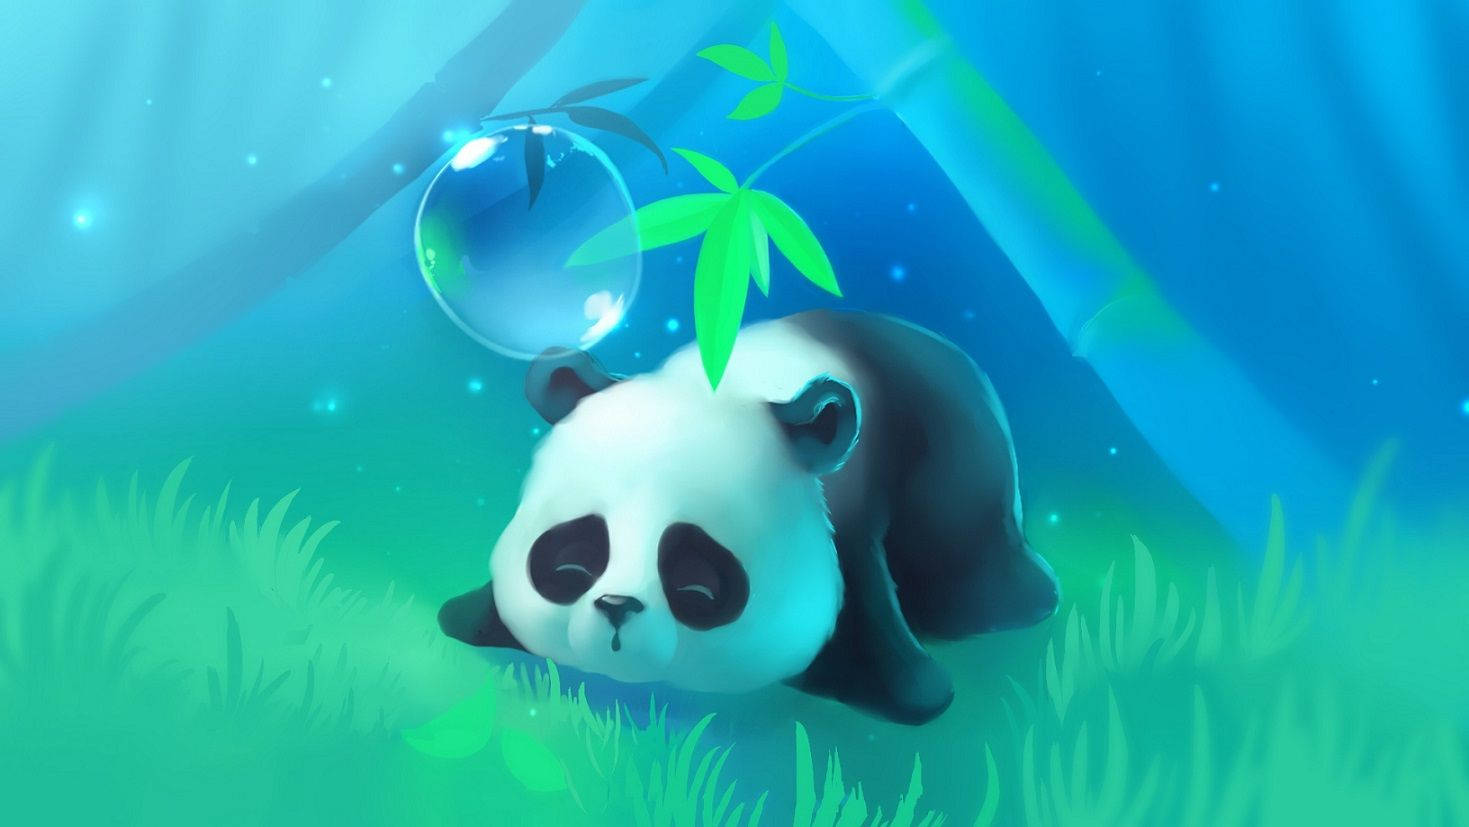 Cute Panda Sleeping On A Grass